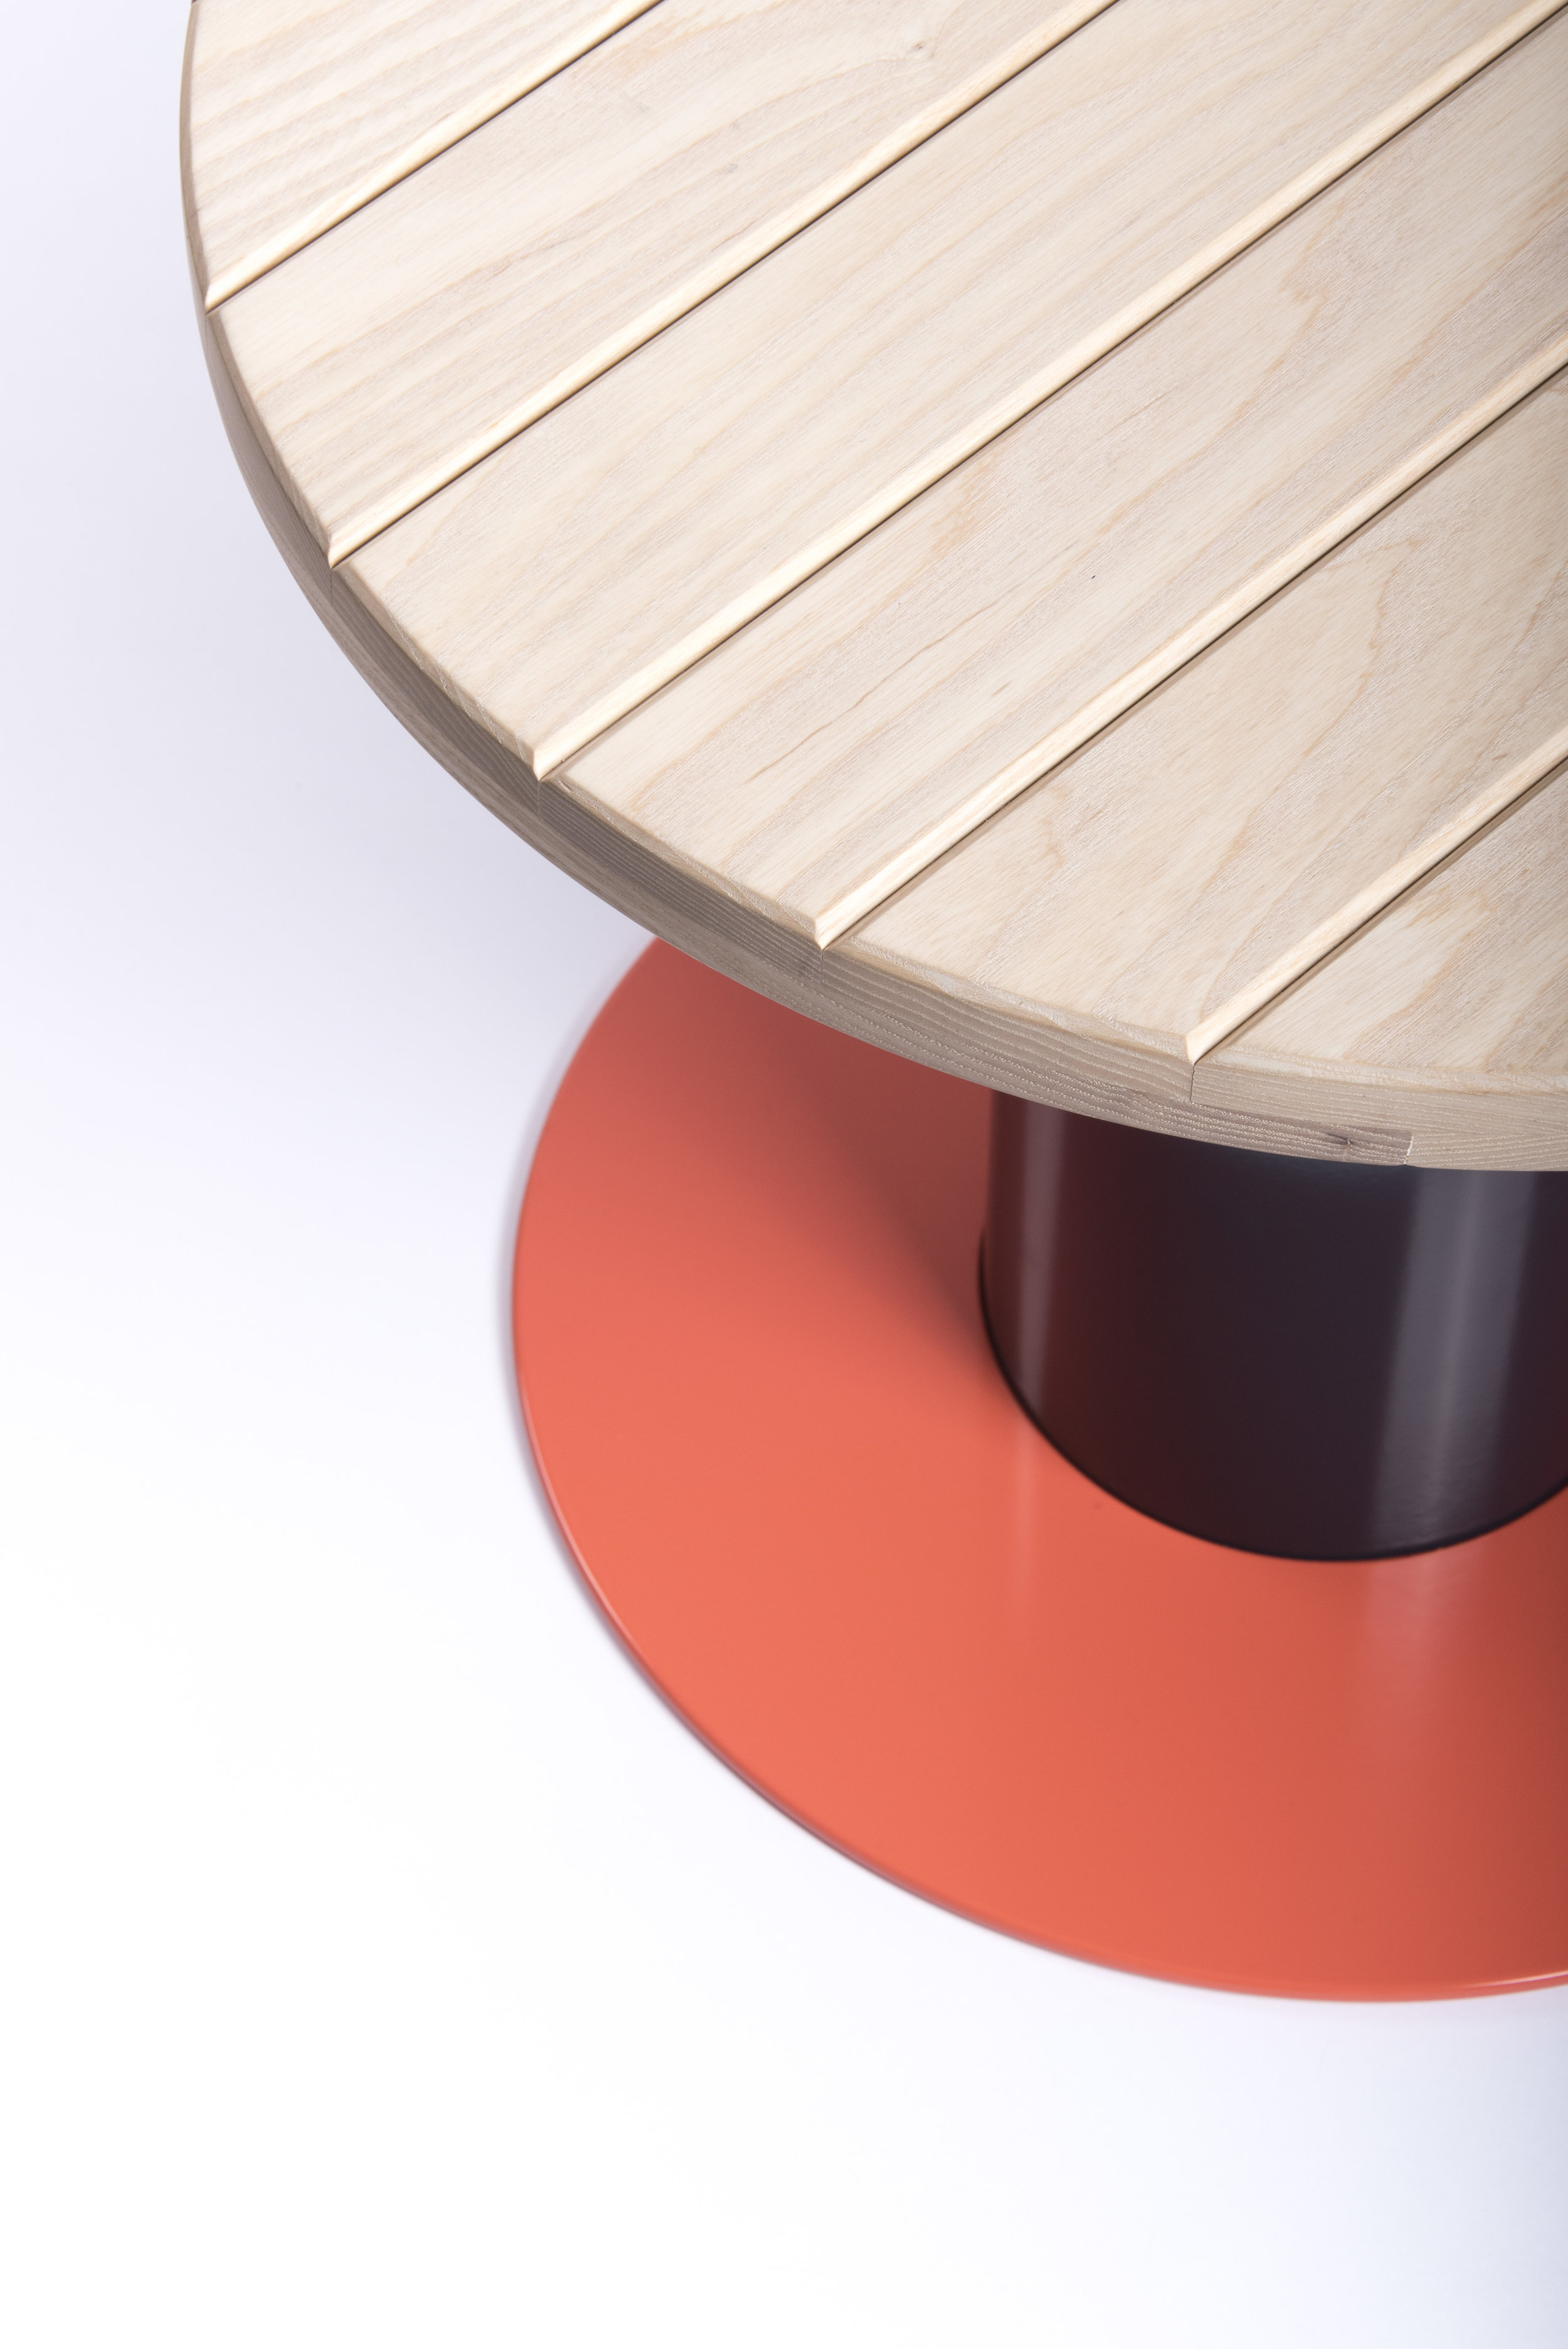 Reel Side Tables - David Derksen Design10.jpg